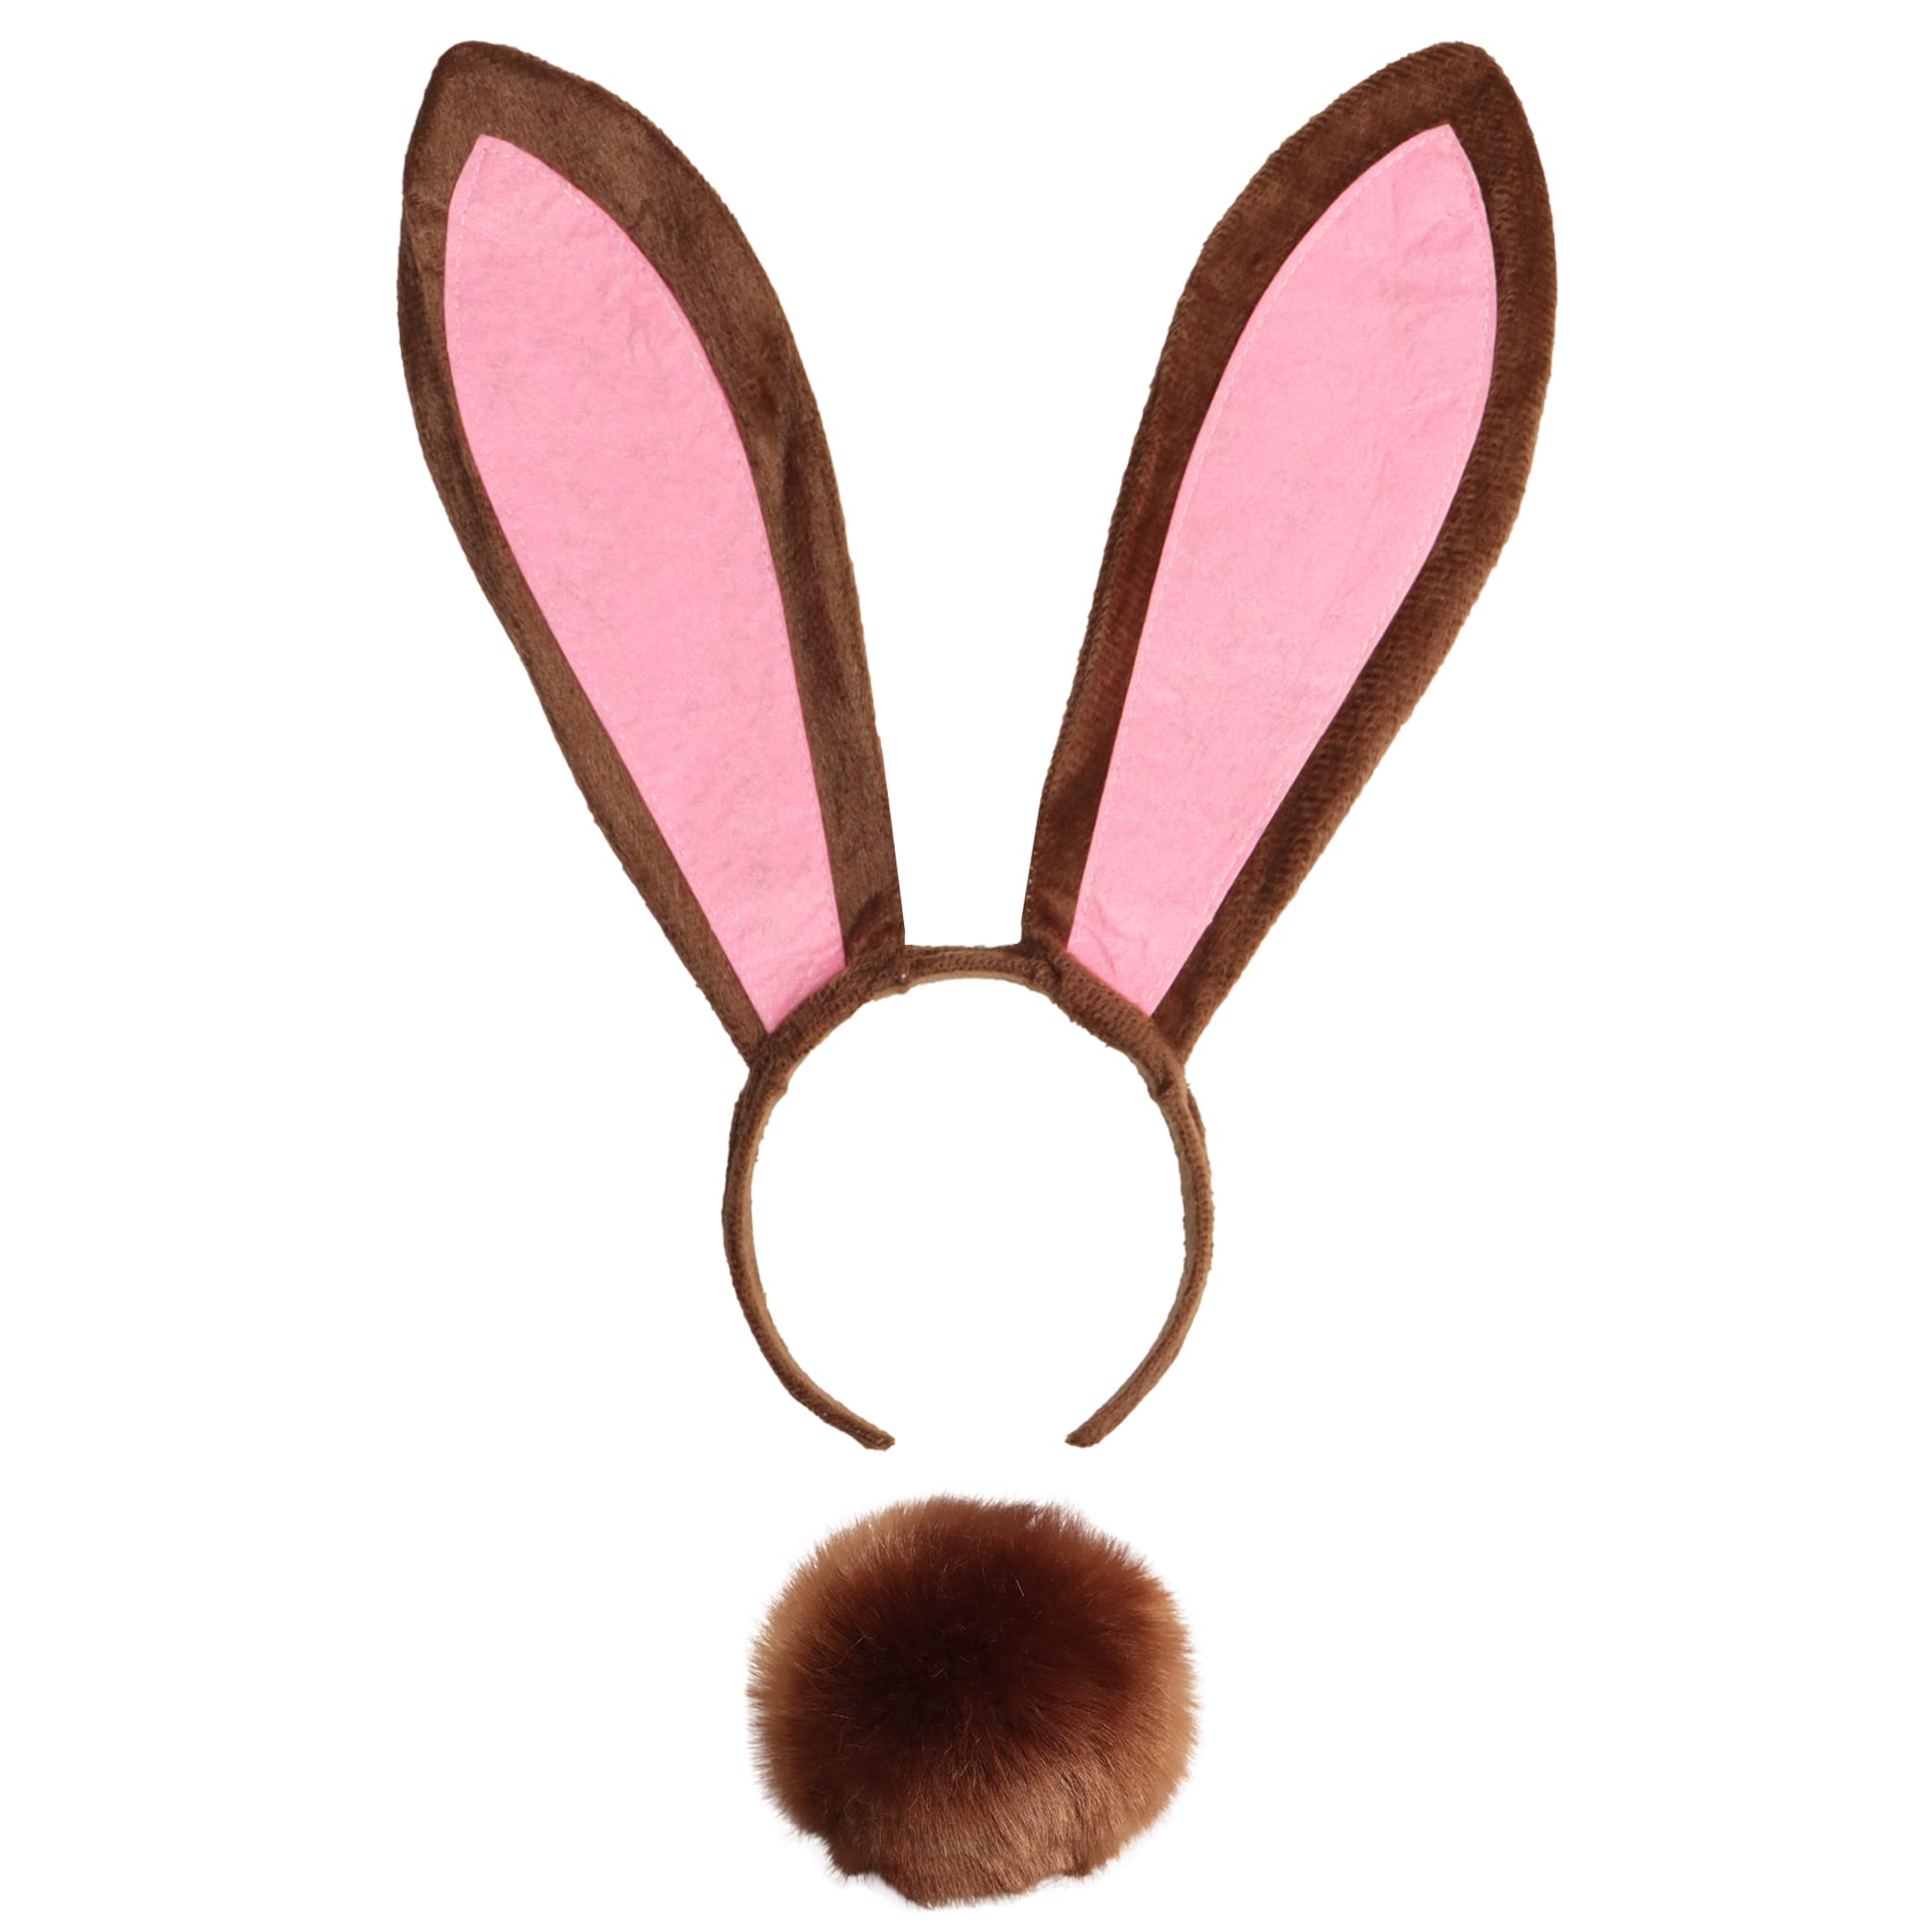 brown bunny ears